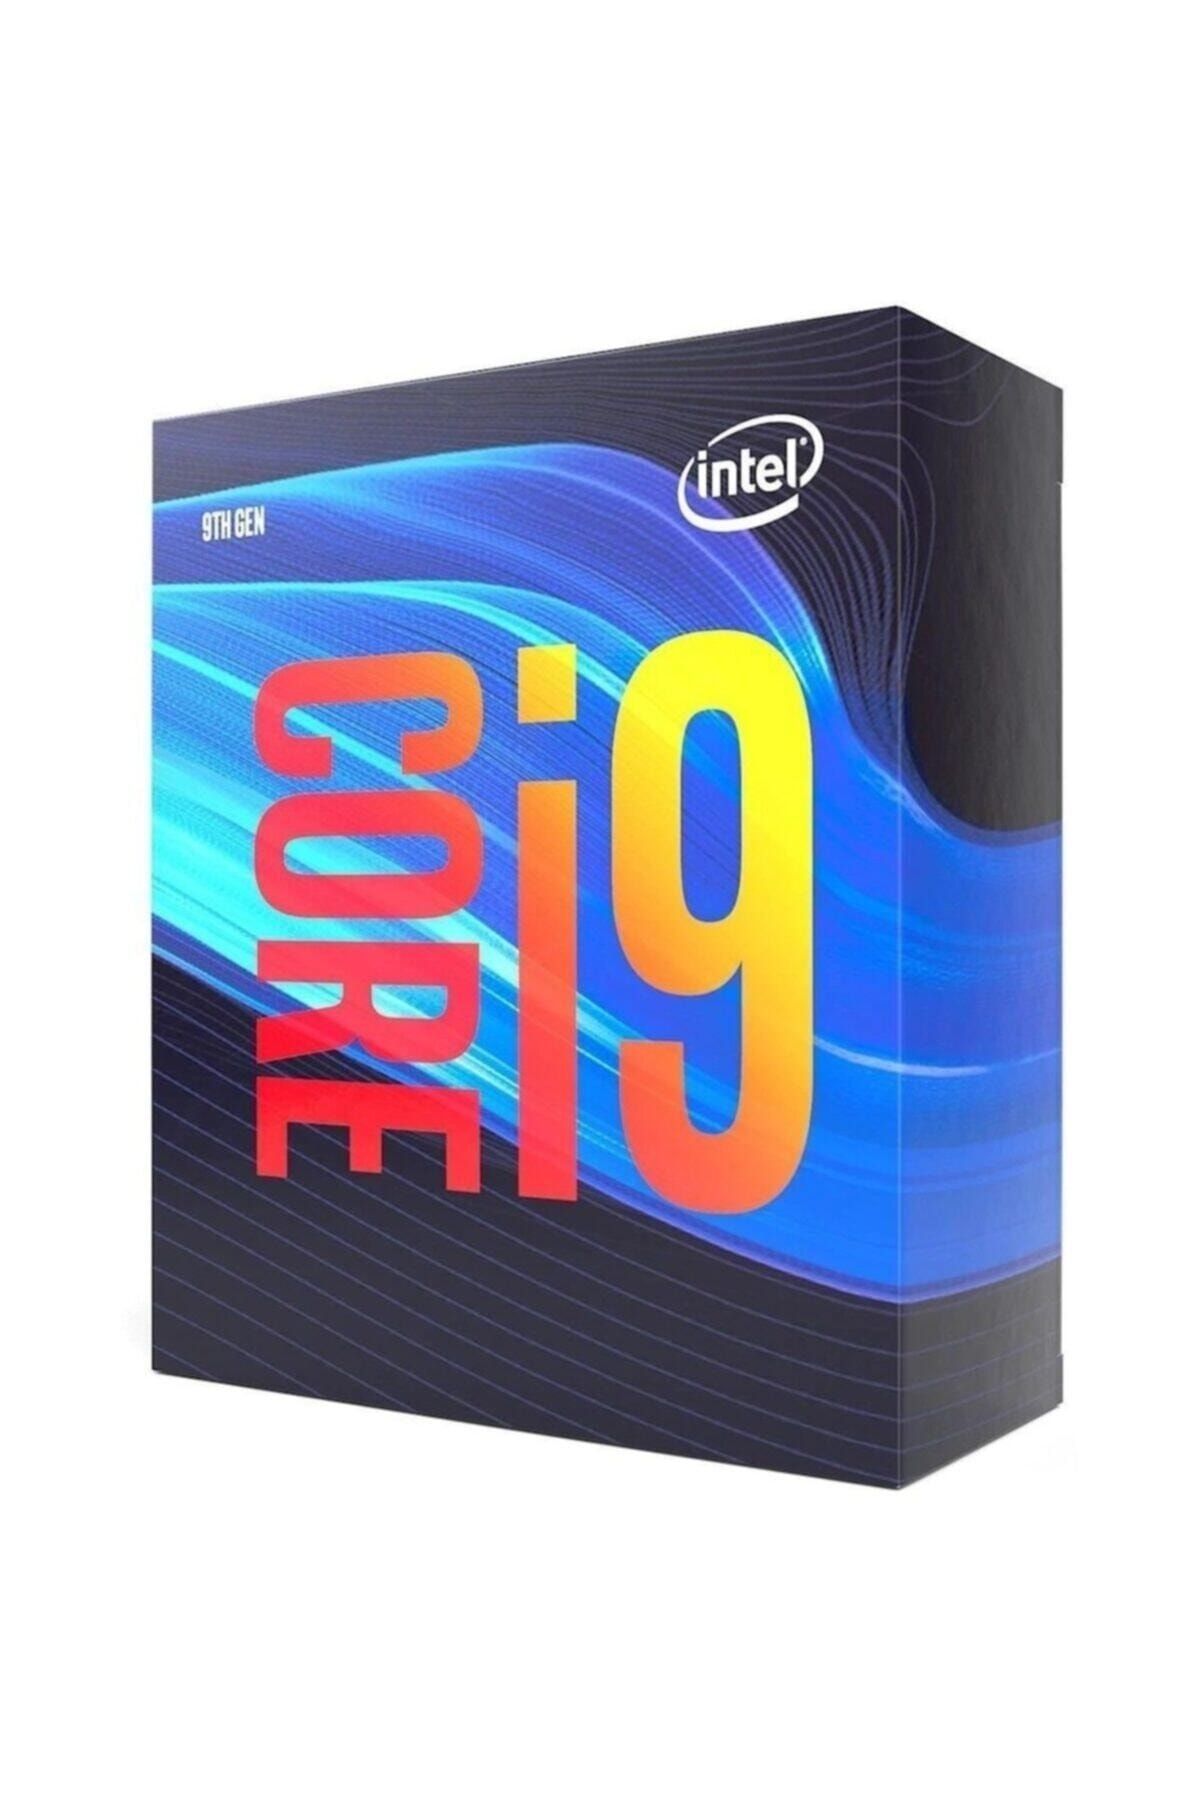 Intel Core I9 9900 3.10ghz 16mb Önbellek 8 Çekirdek 1151 14nm Işlemci Kutulu Box